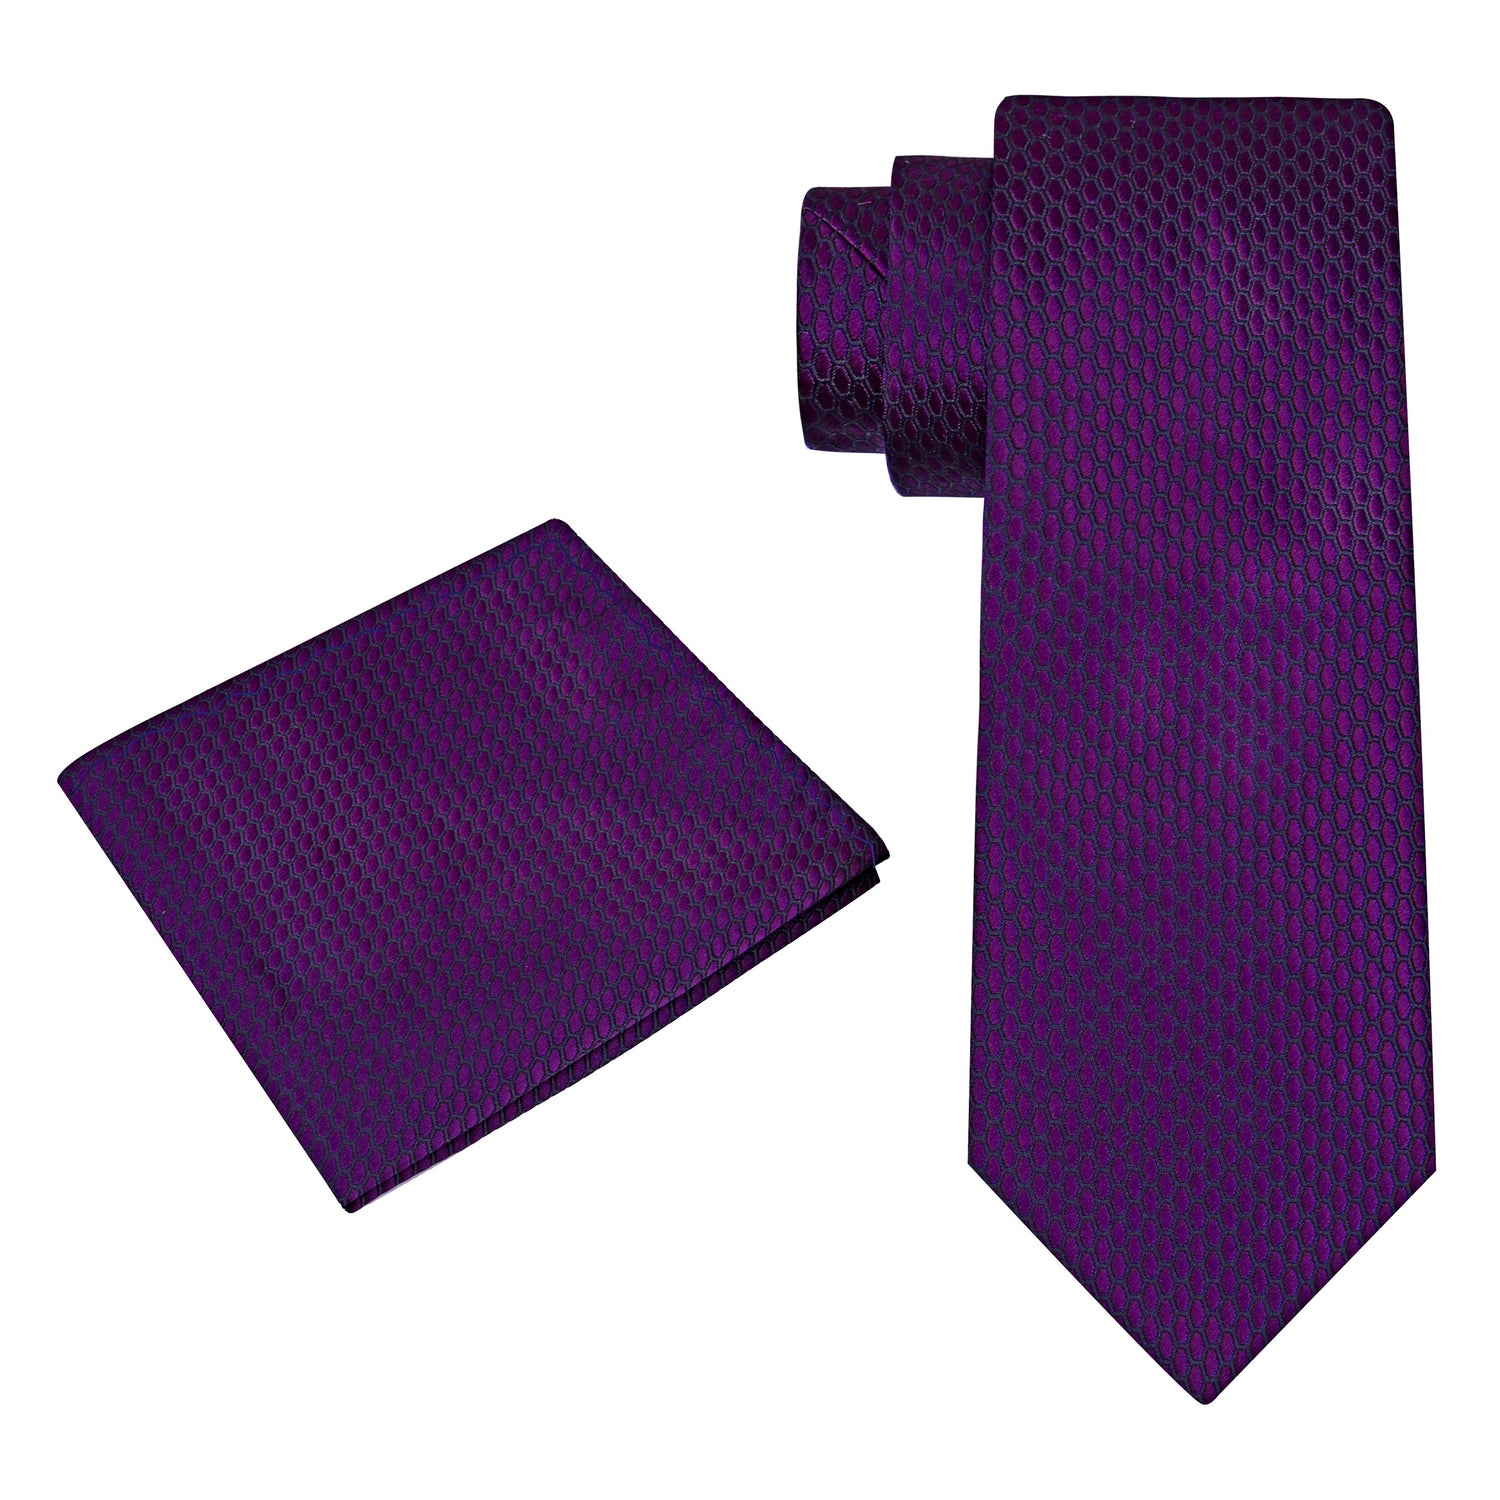 Alt View: A Purple, Black Geometric Oval Shaped Pattern Silk Necktie, Matching Pocket Square